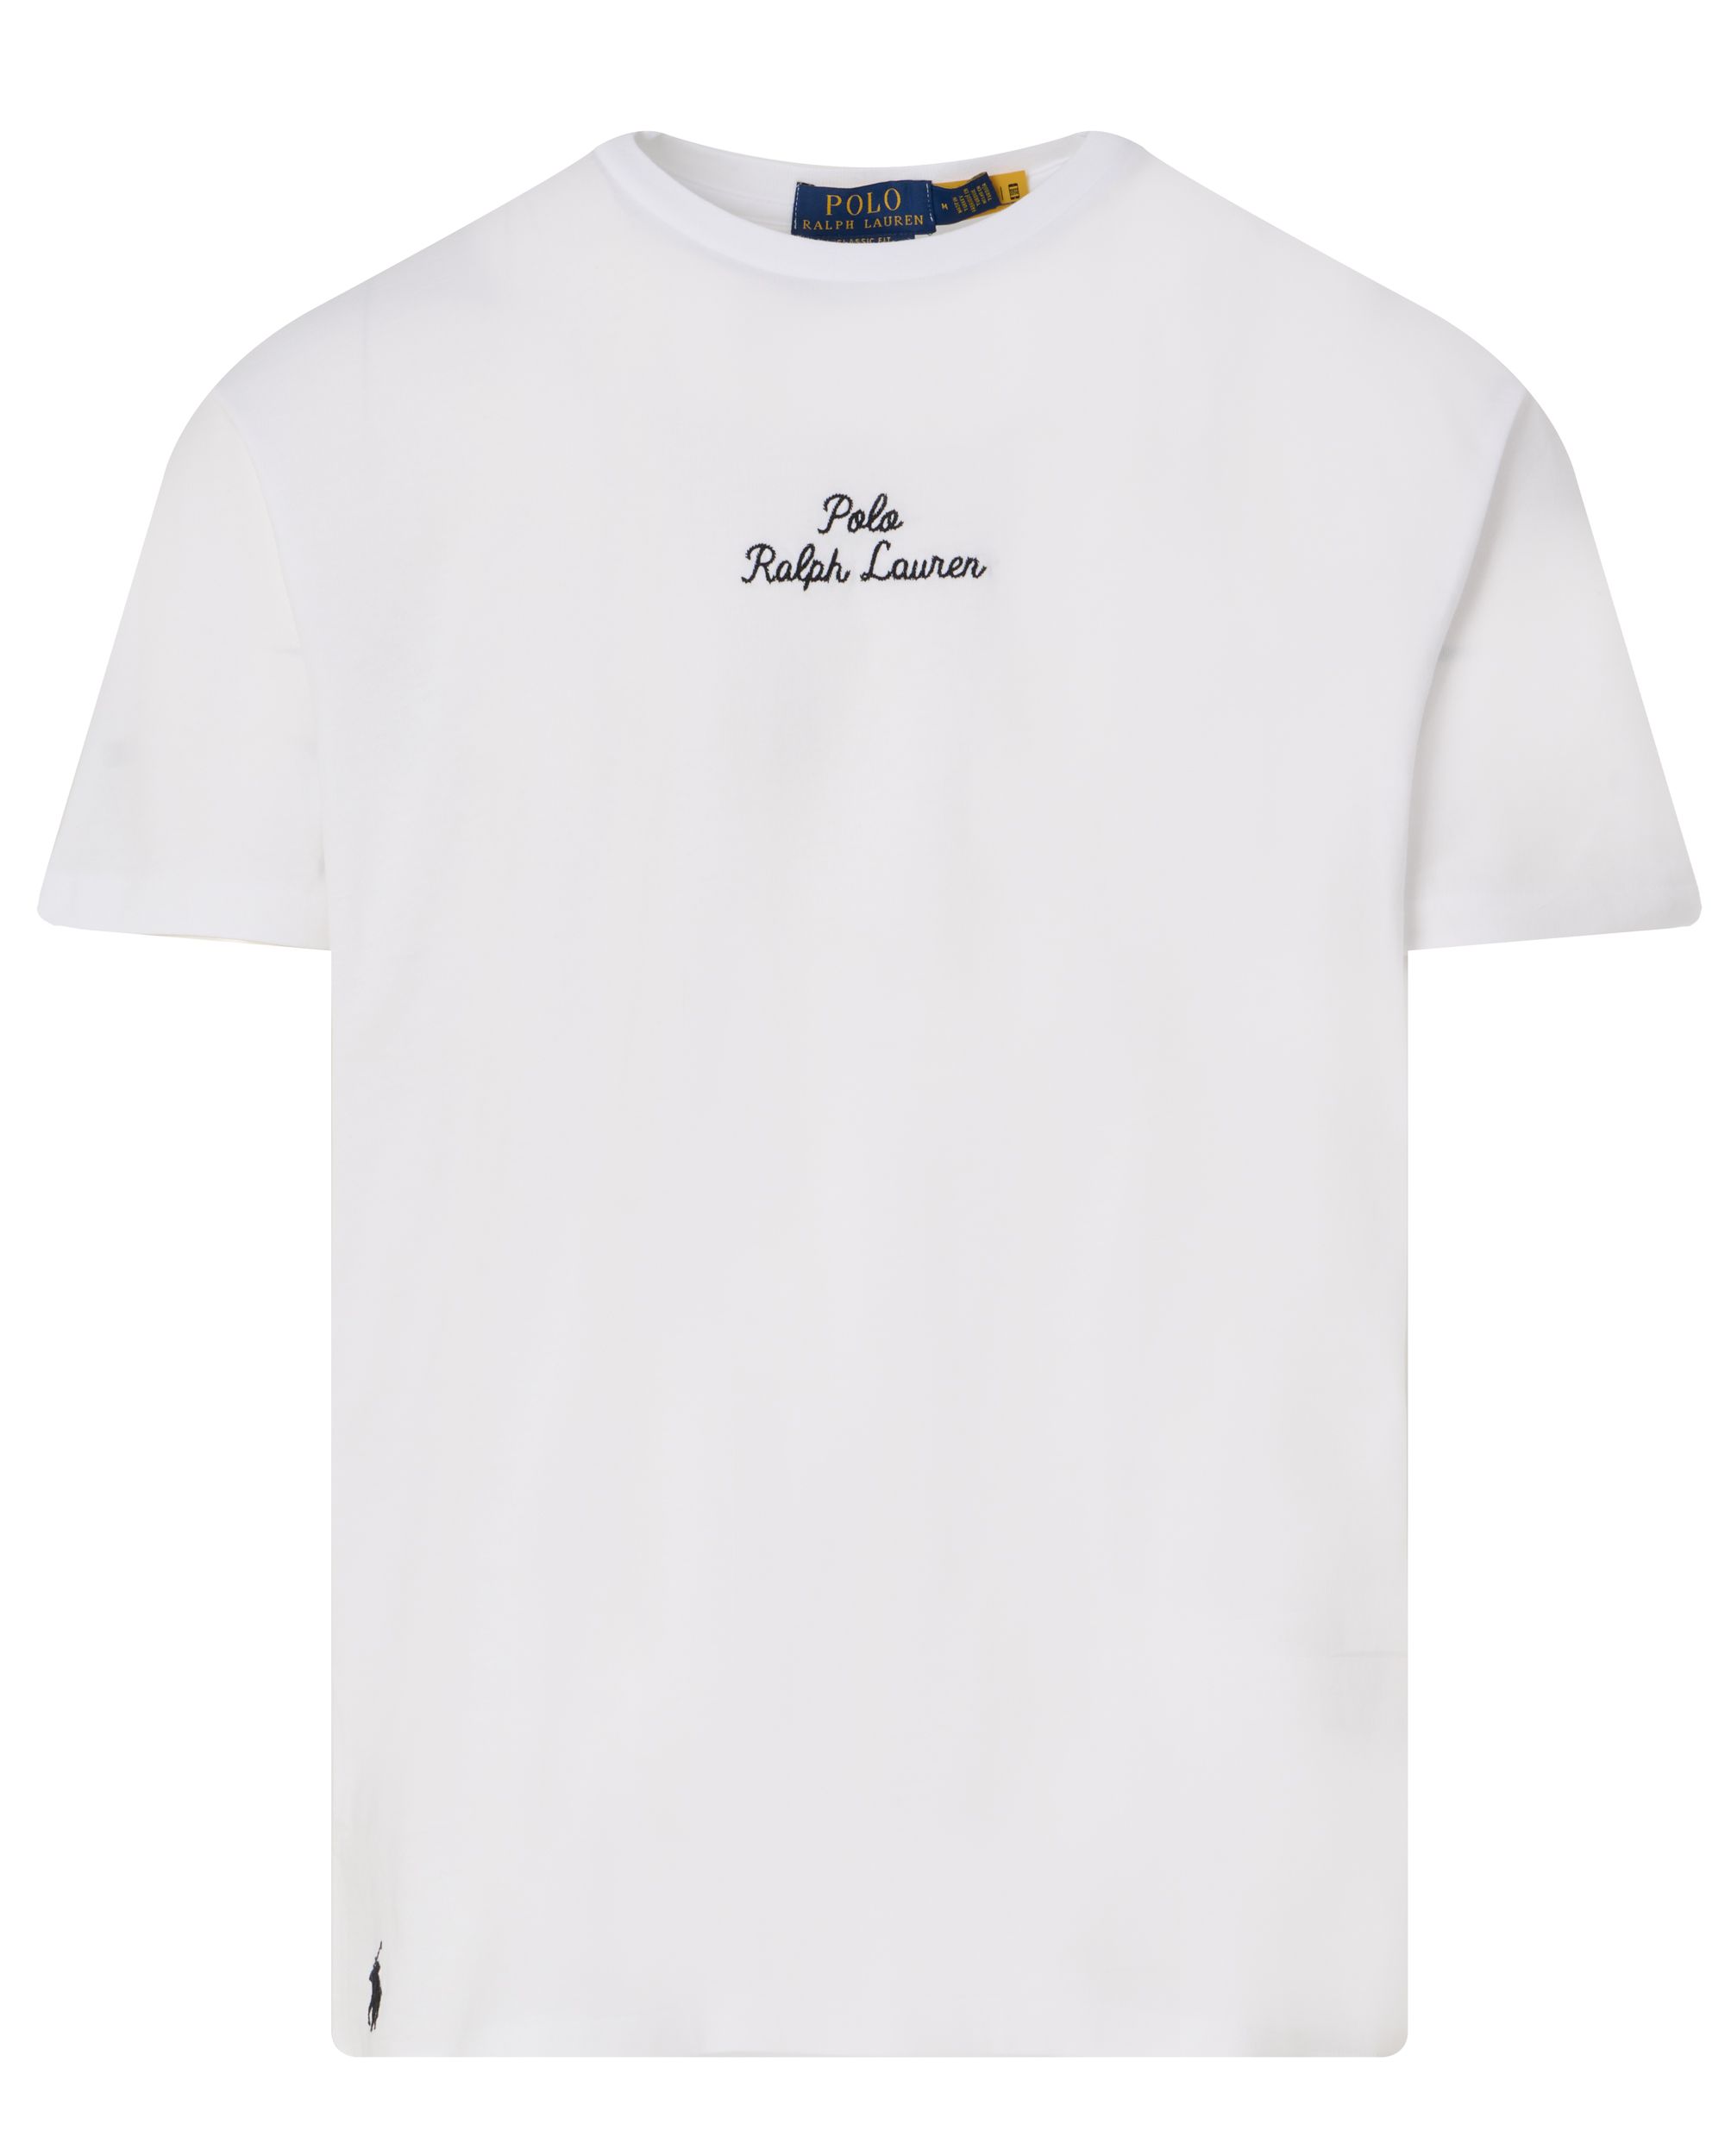 Polo Ralph Lauren T-shirt KM Wit 095299-001-L